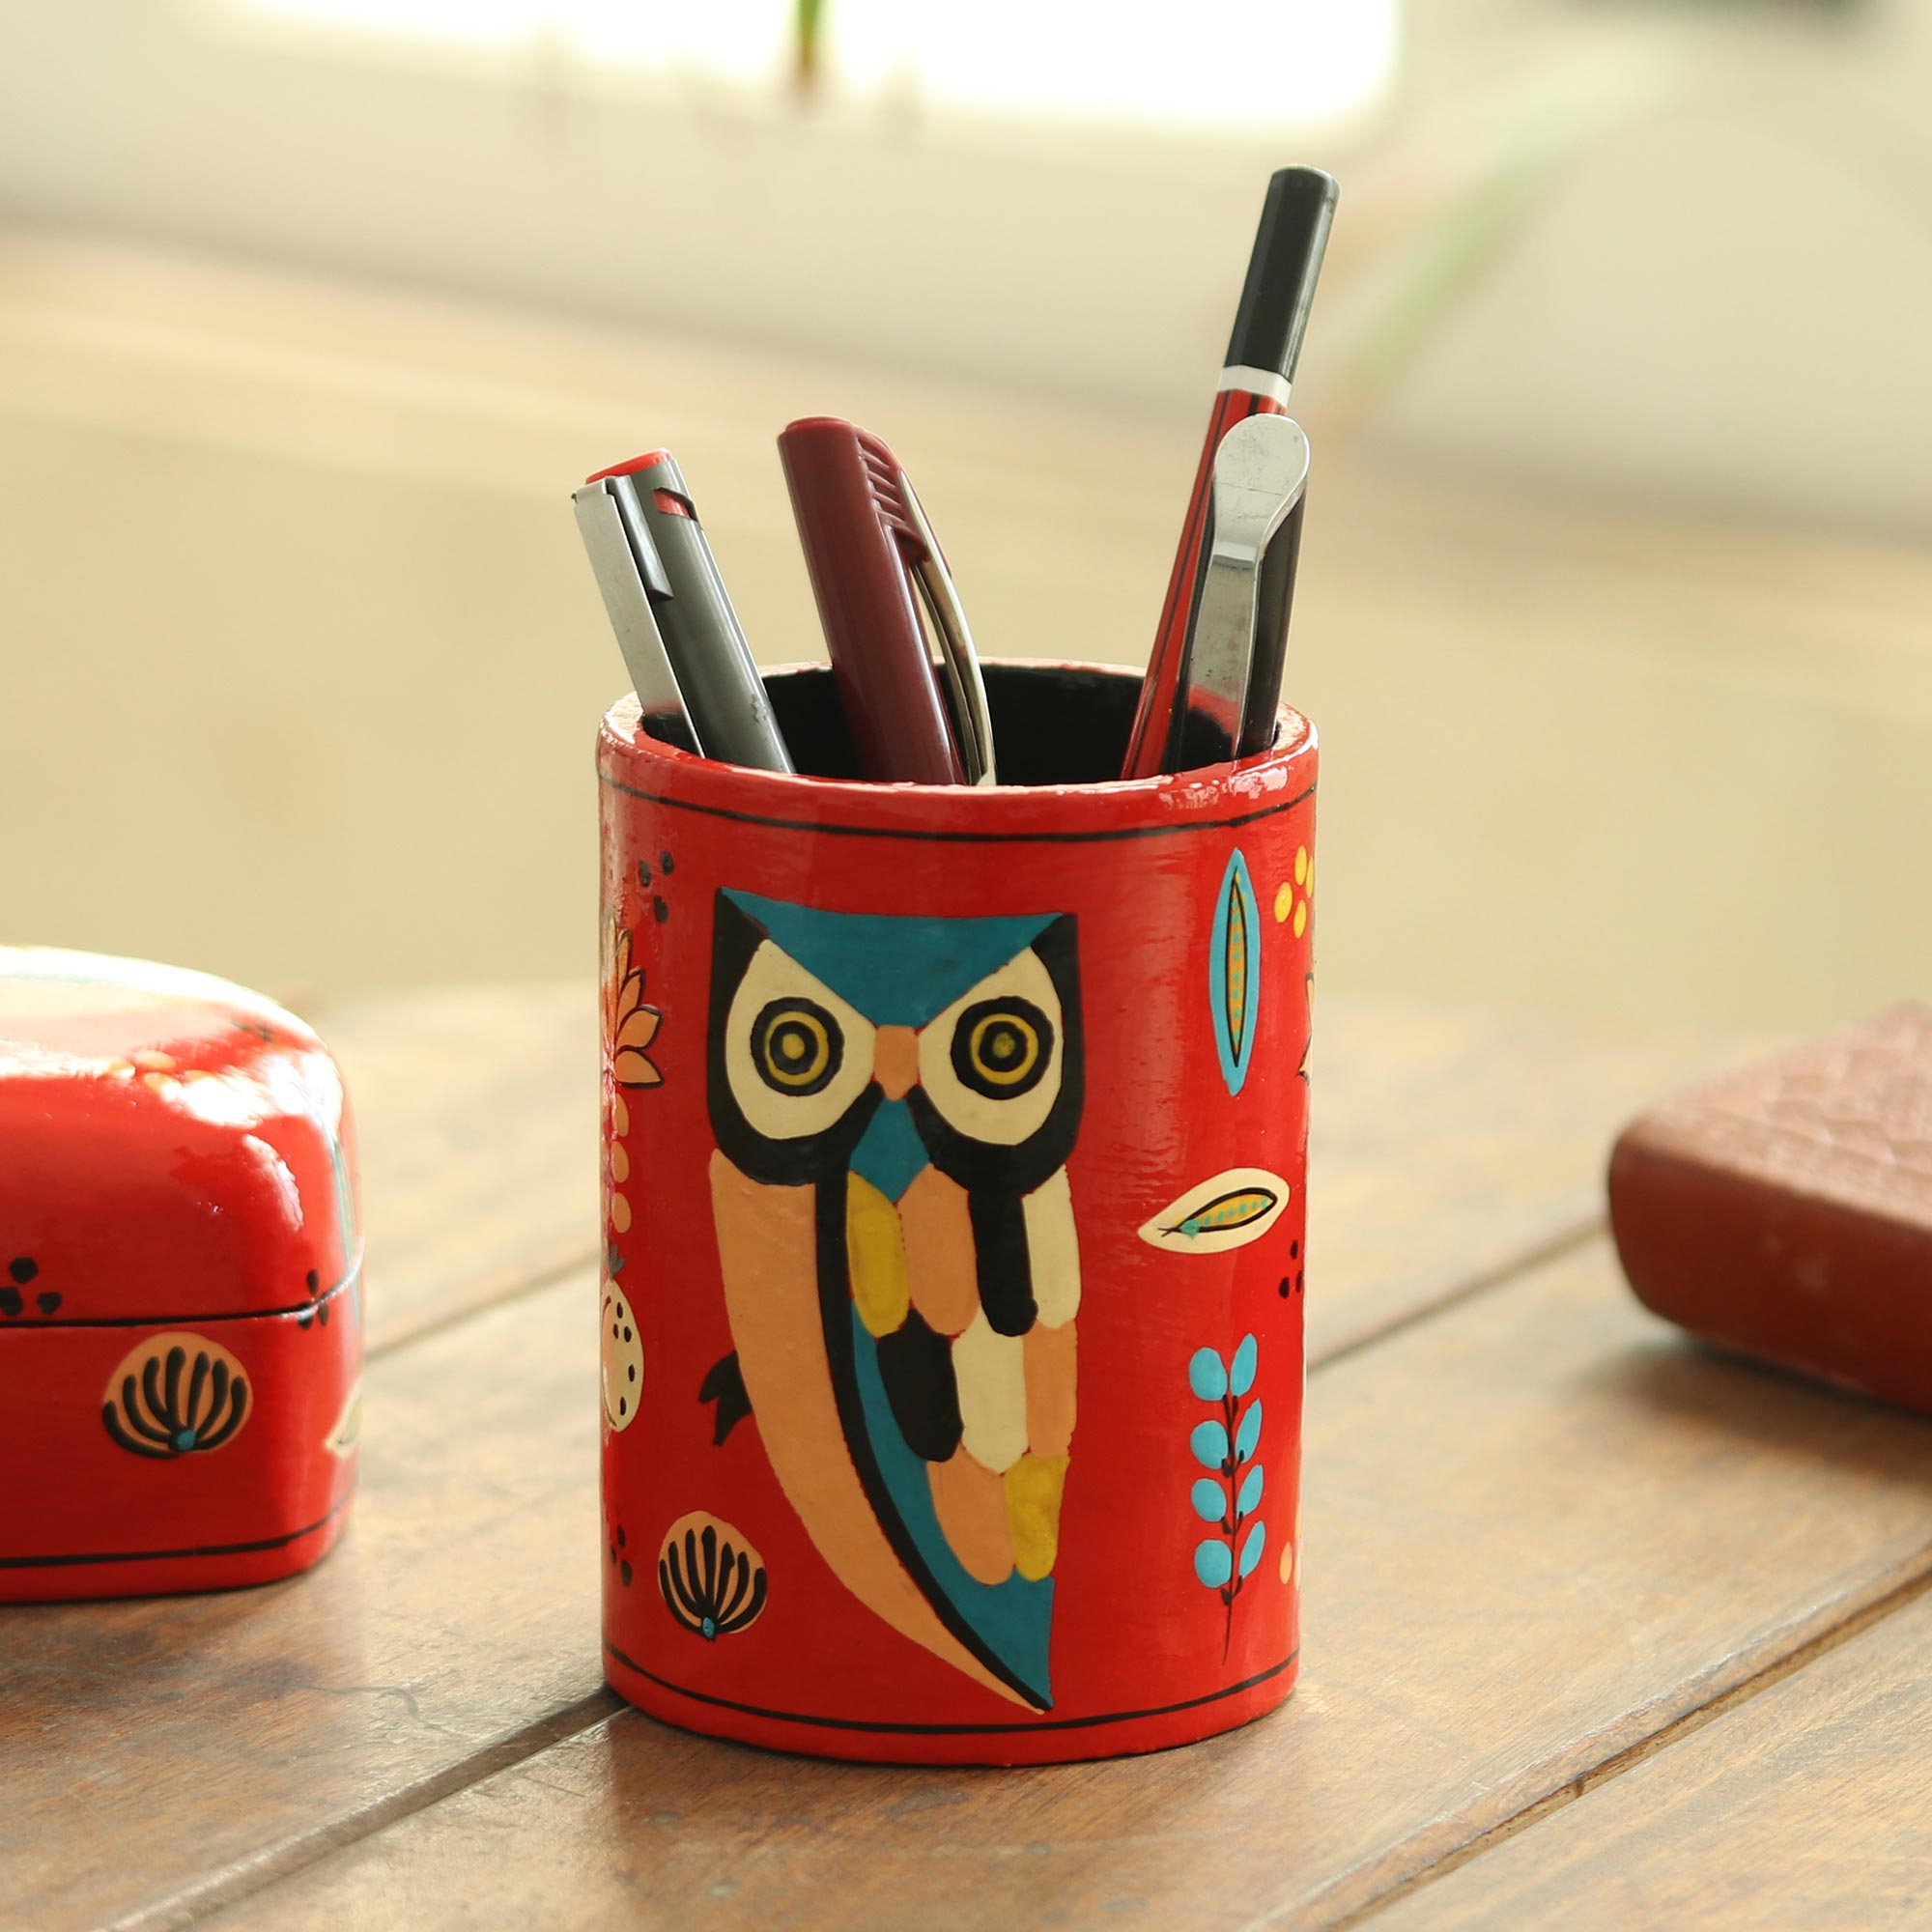 Pen Holder - Handmade Decorative Soapstone Pencil And Pen Holder